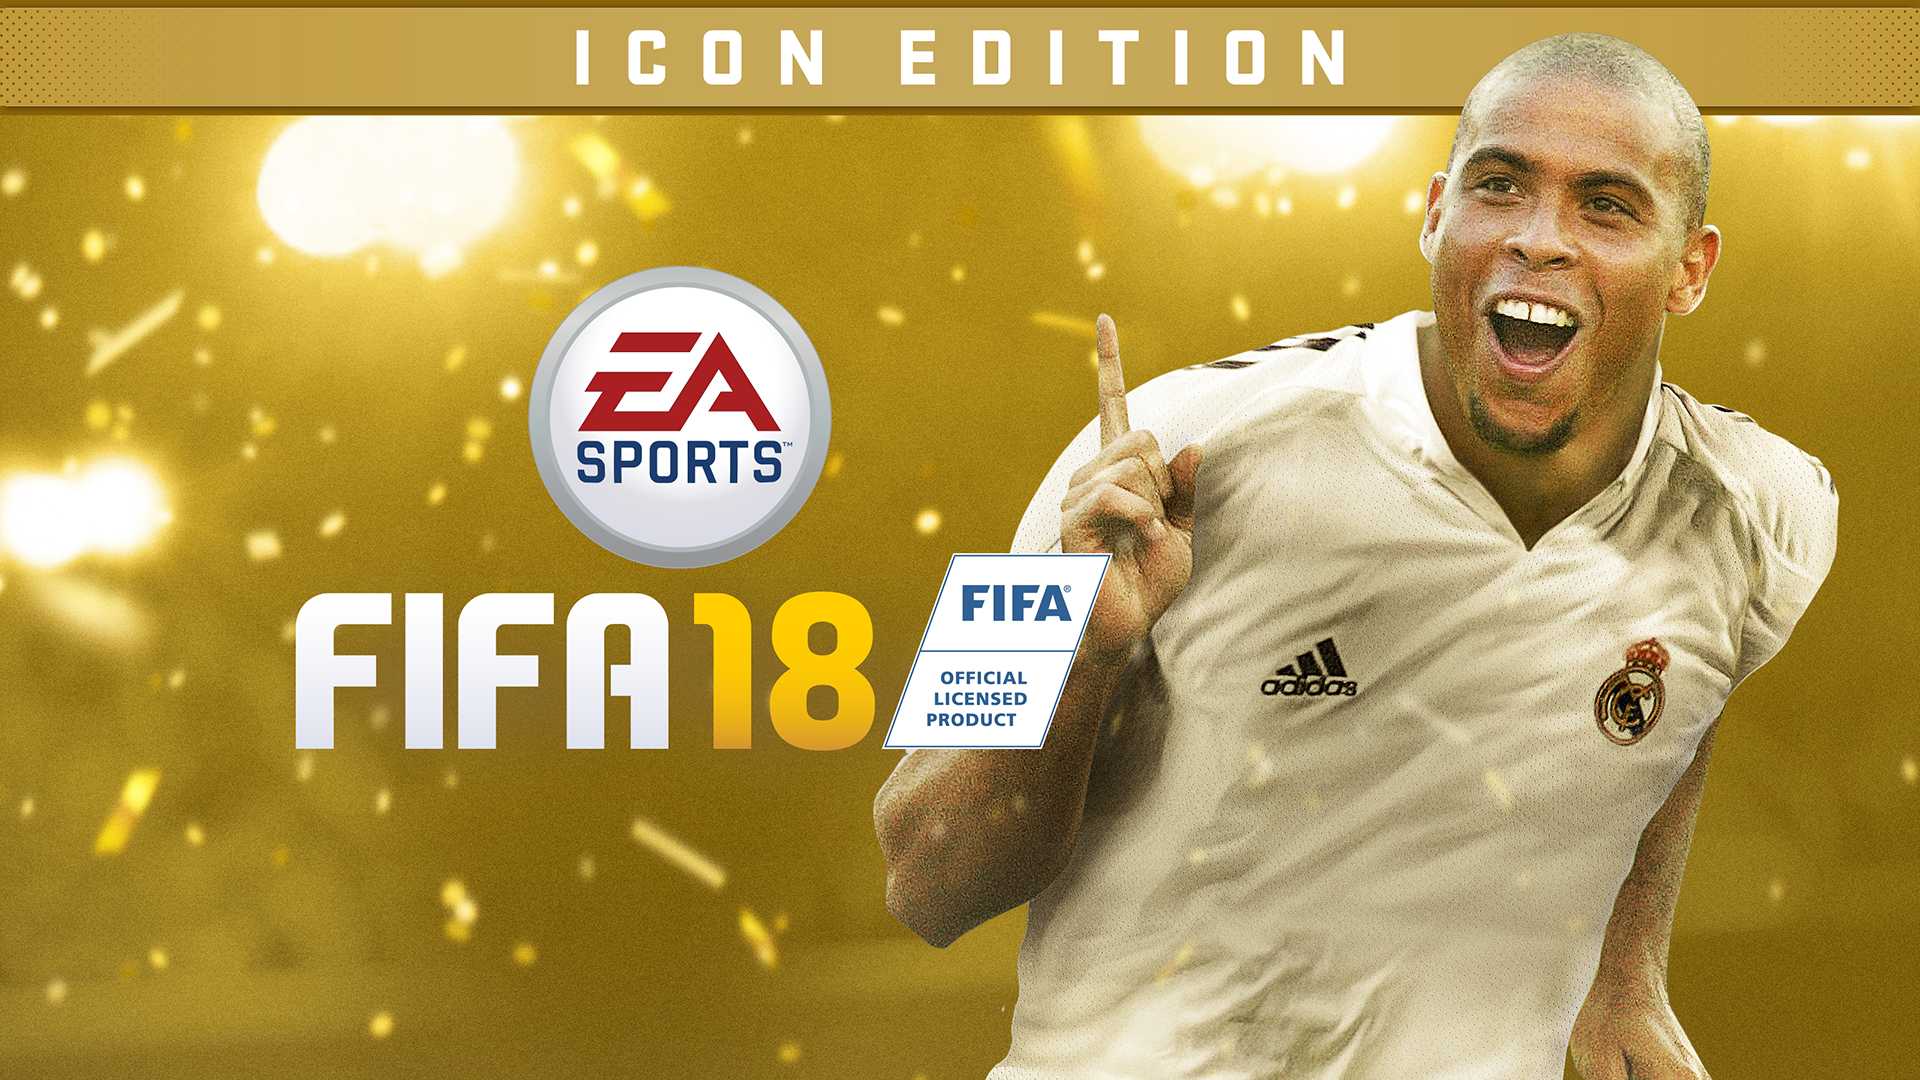 Fifa live. ФИФА 18. FIFA 18 обложка. FIFA 18 (ФИФА 18). ФИФА 2018 обложка.